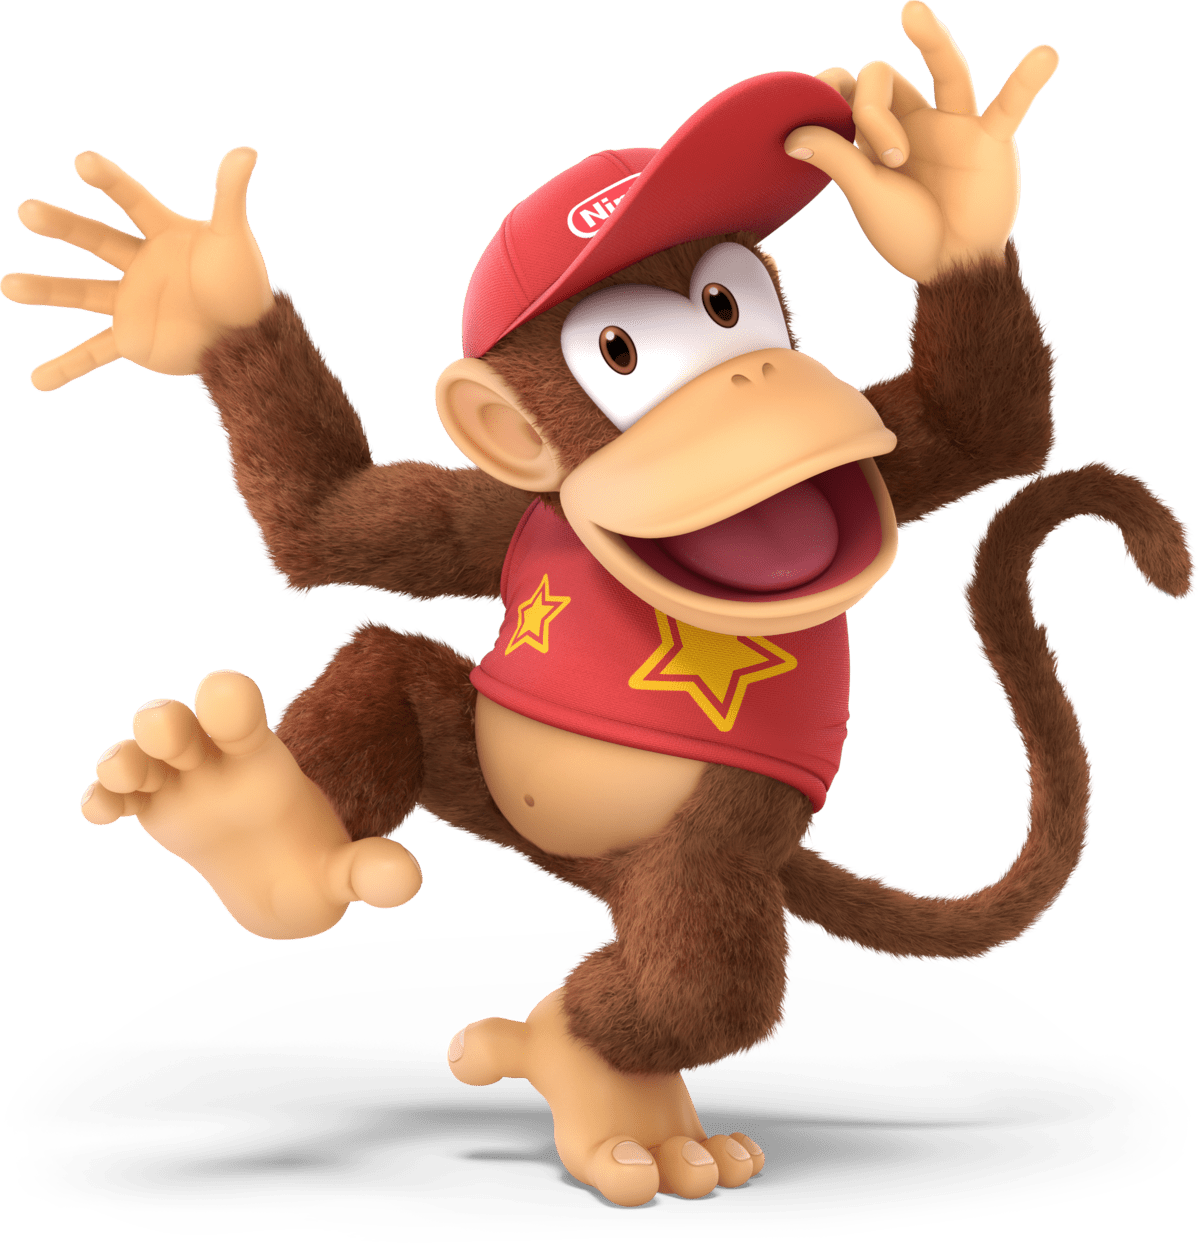 Le personnage Diddy Kong de Super Smash Bros. Ultimate